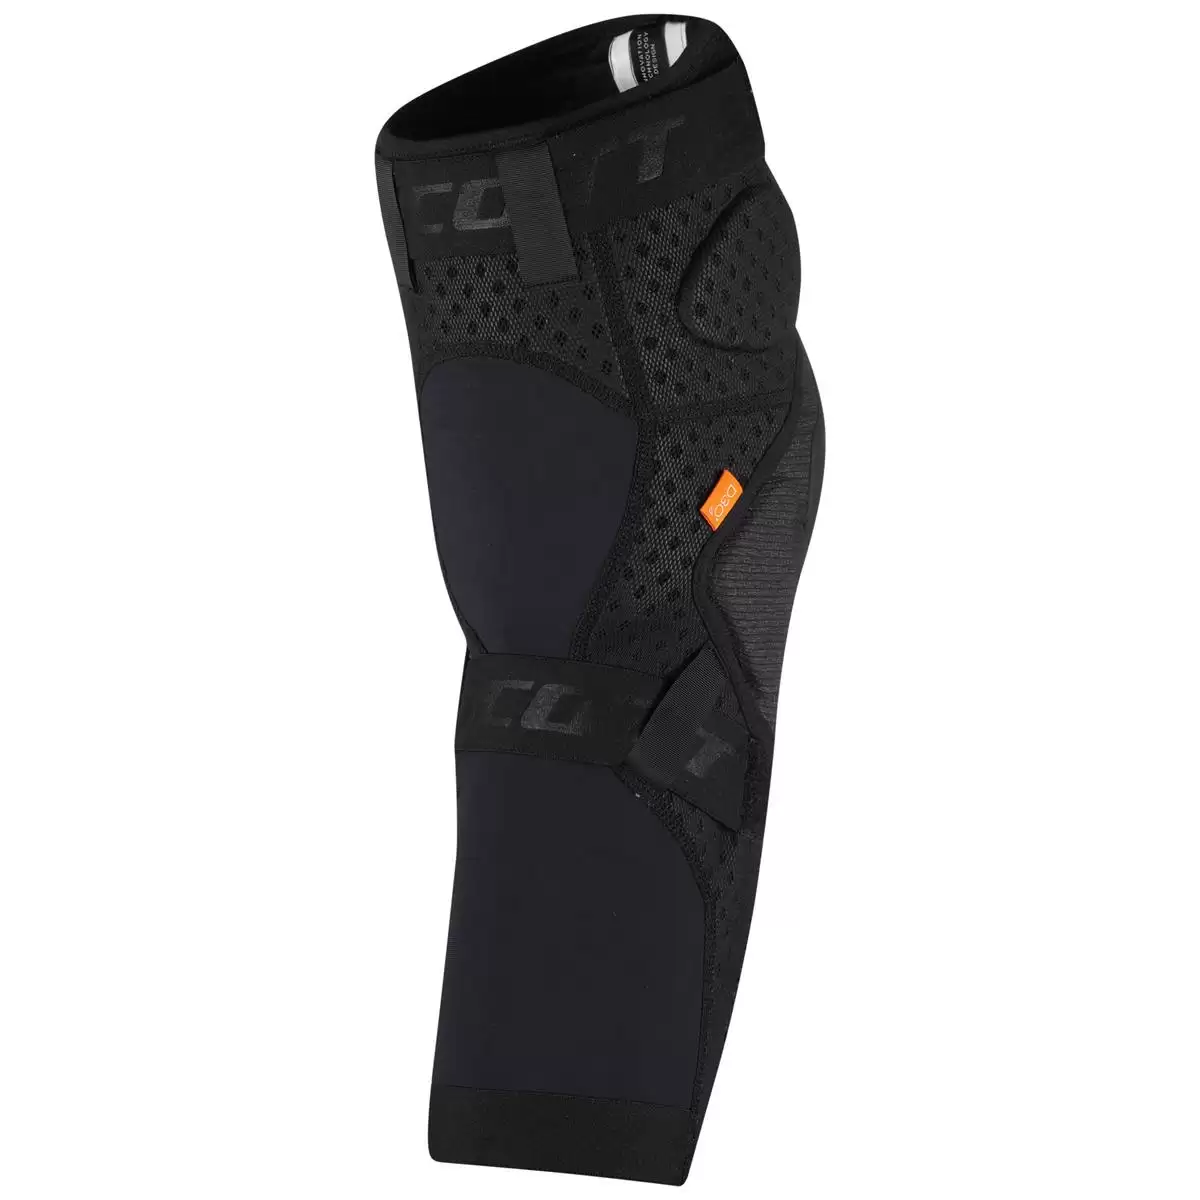 Knee pads Softcon 2 Black/Grey - Size XL #1